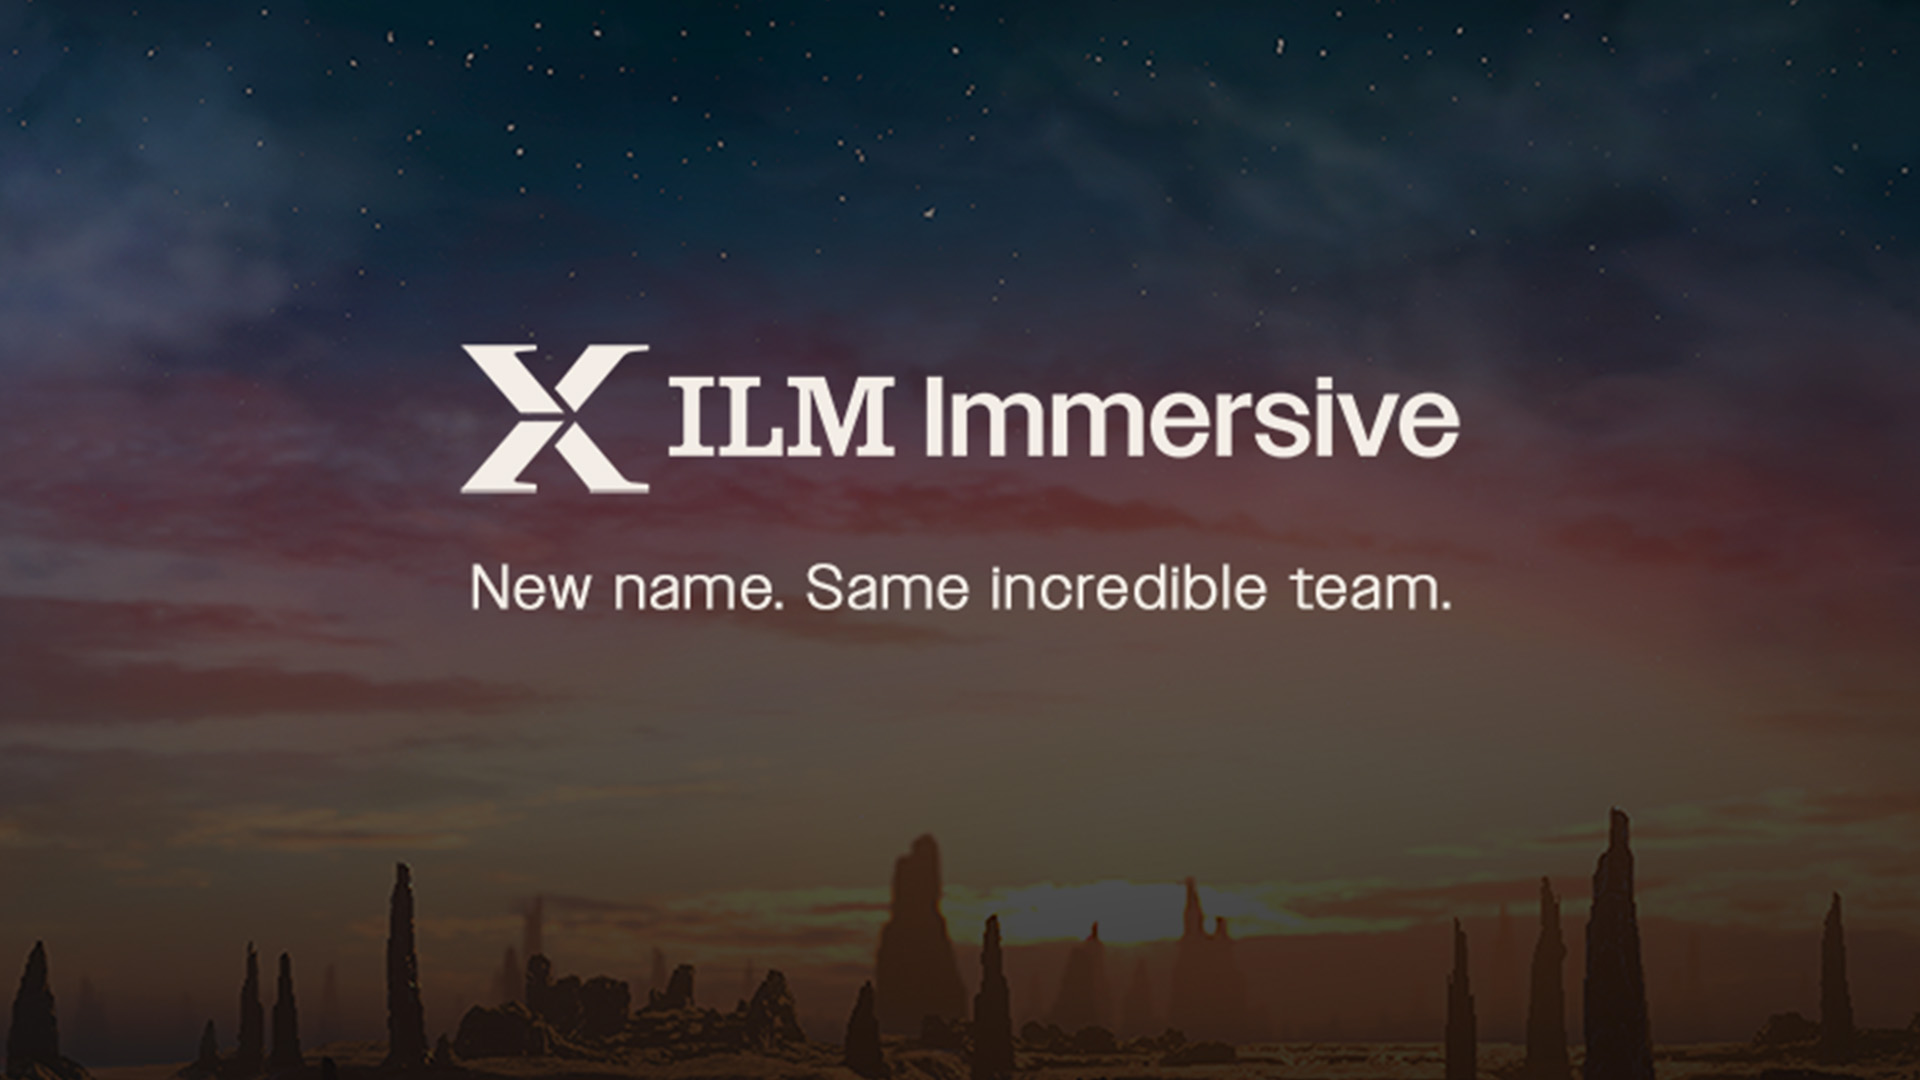 The new logo for ILM Immersive.